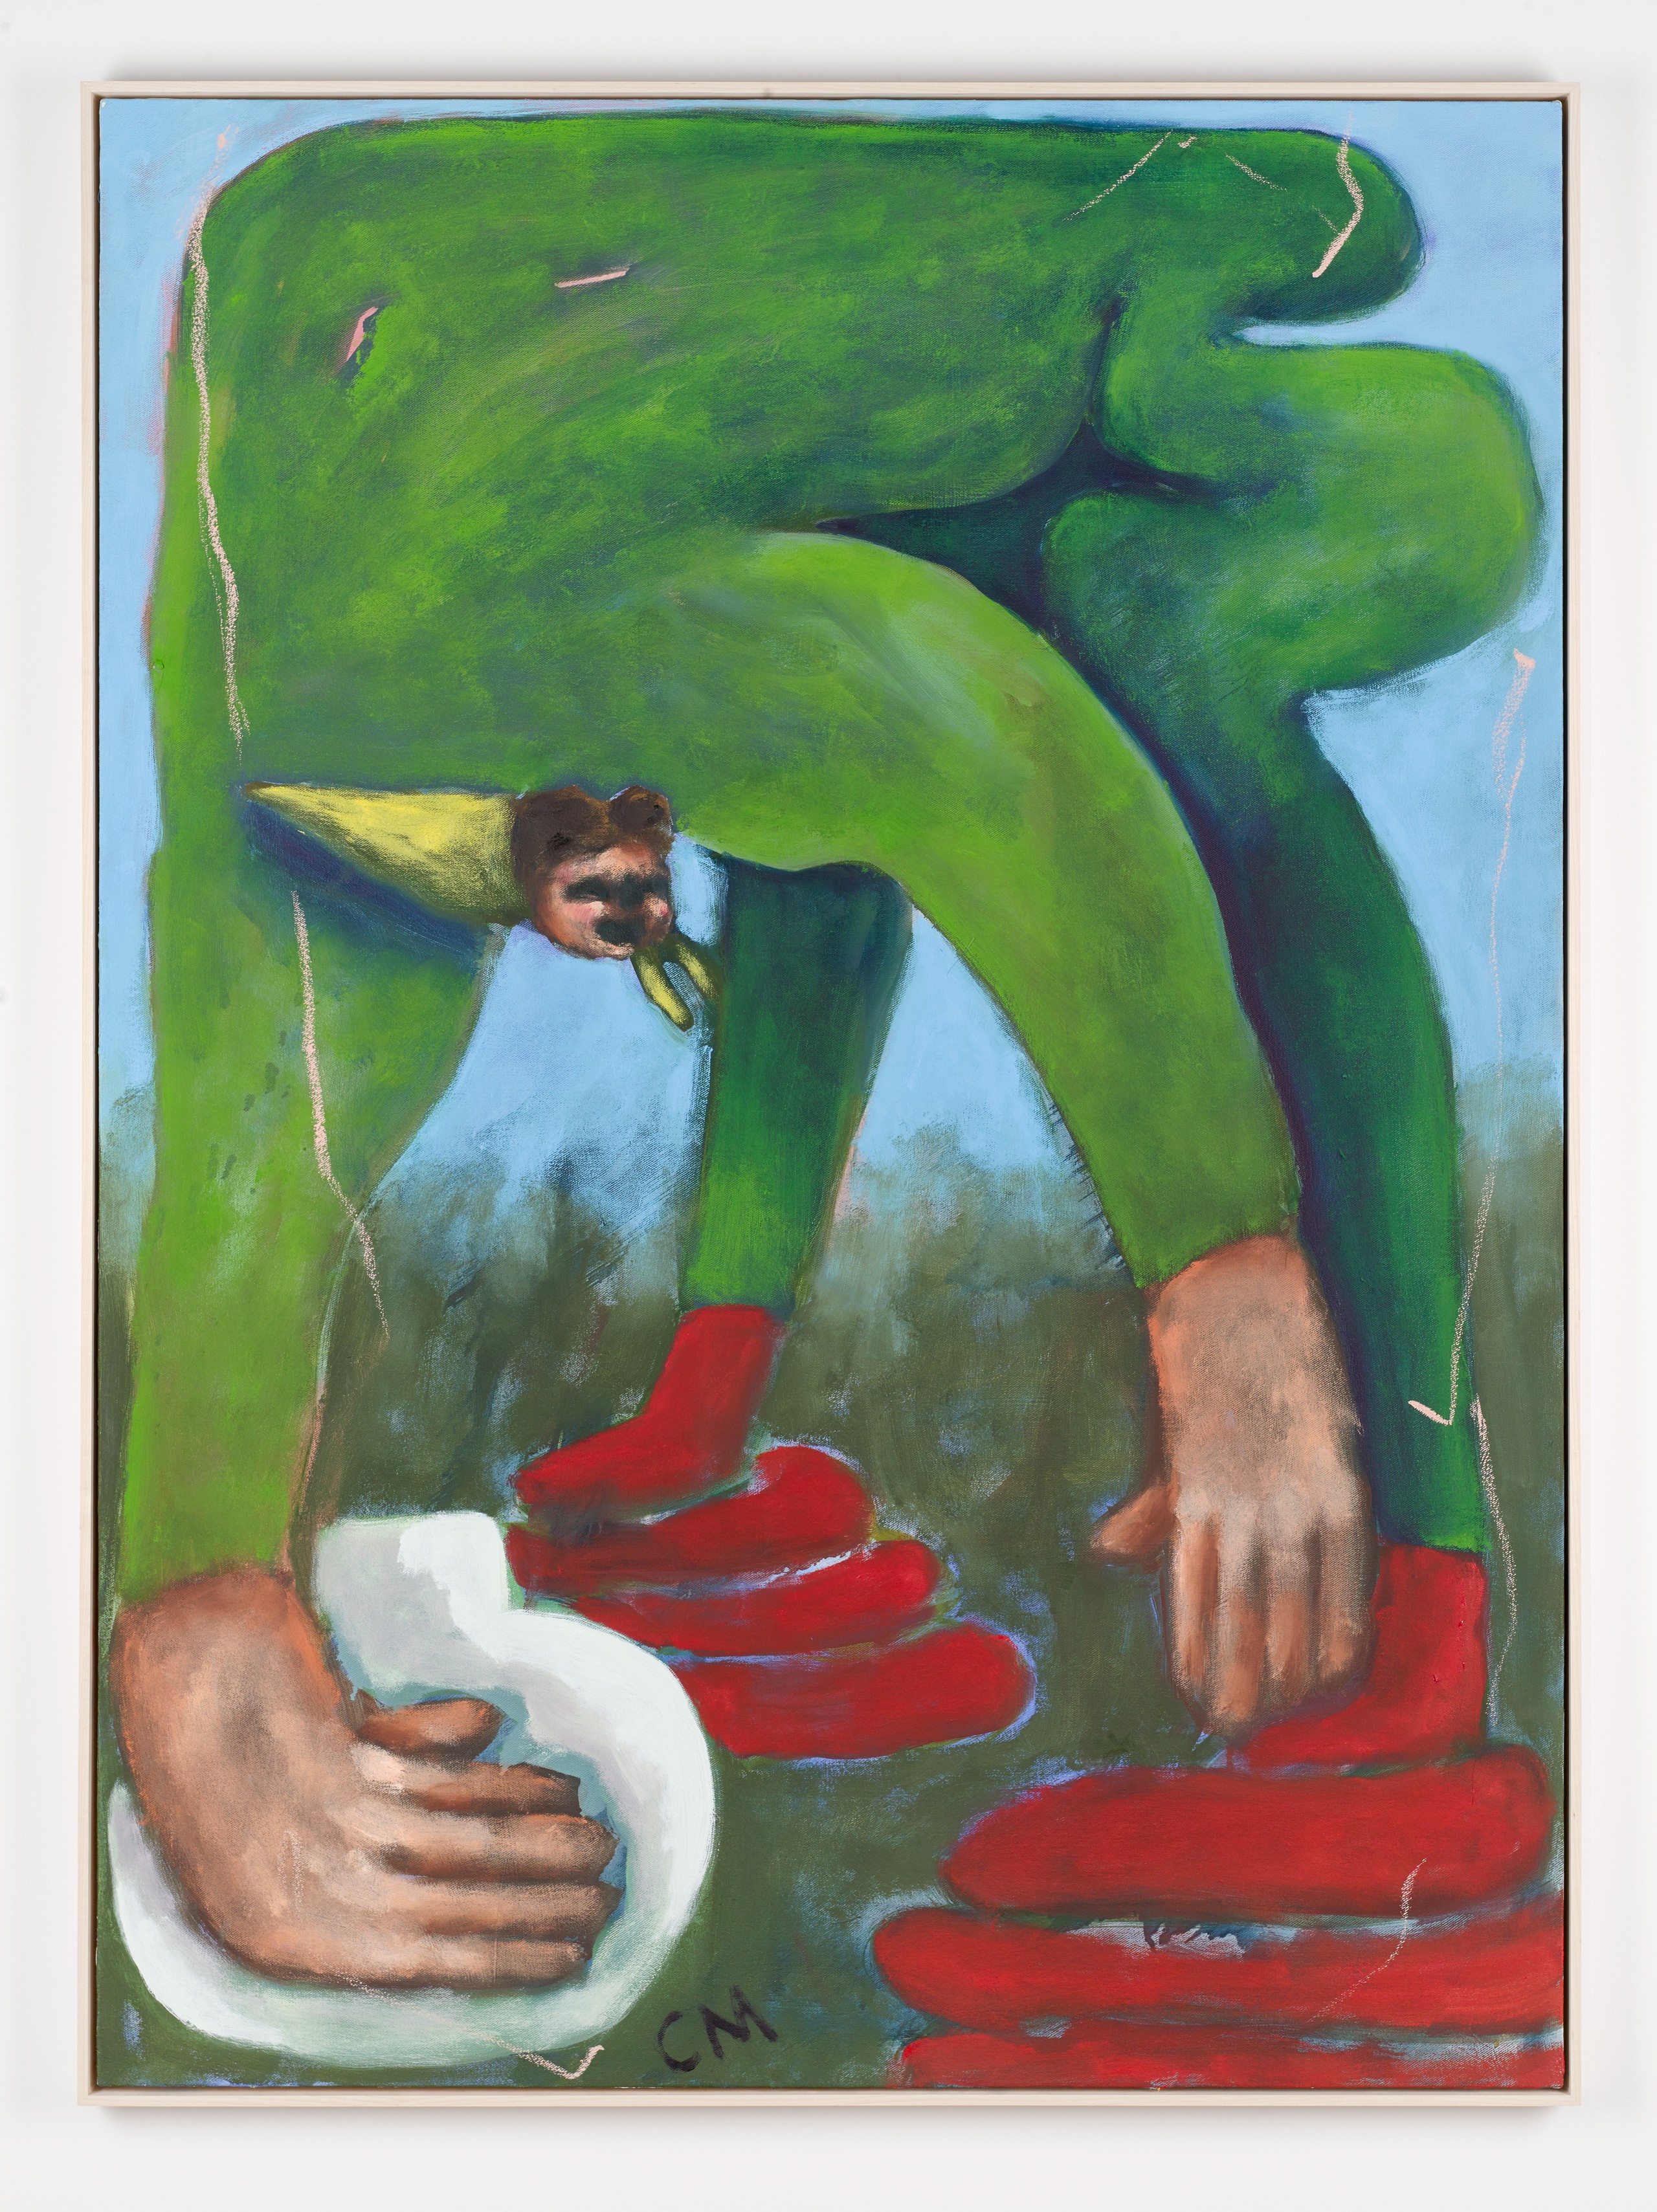 Conny Maier, Aussichten, 2022, oil, pigment, oil stick on canvas, 150 x 110 cm, 59 1/2 x 43 1/2 in